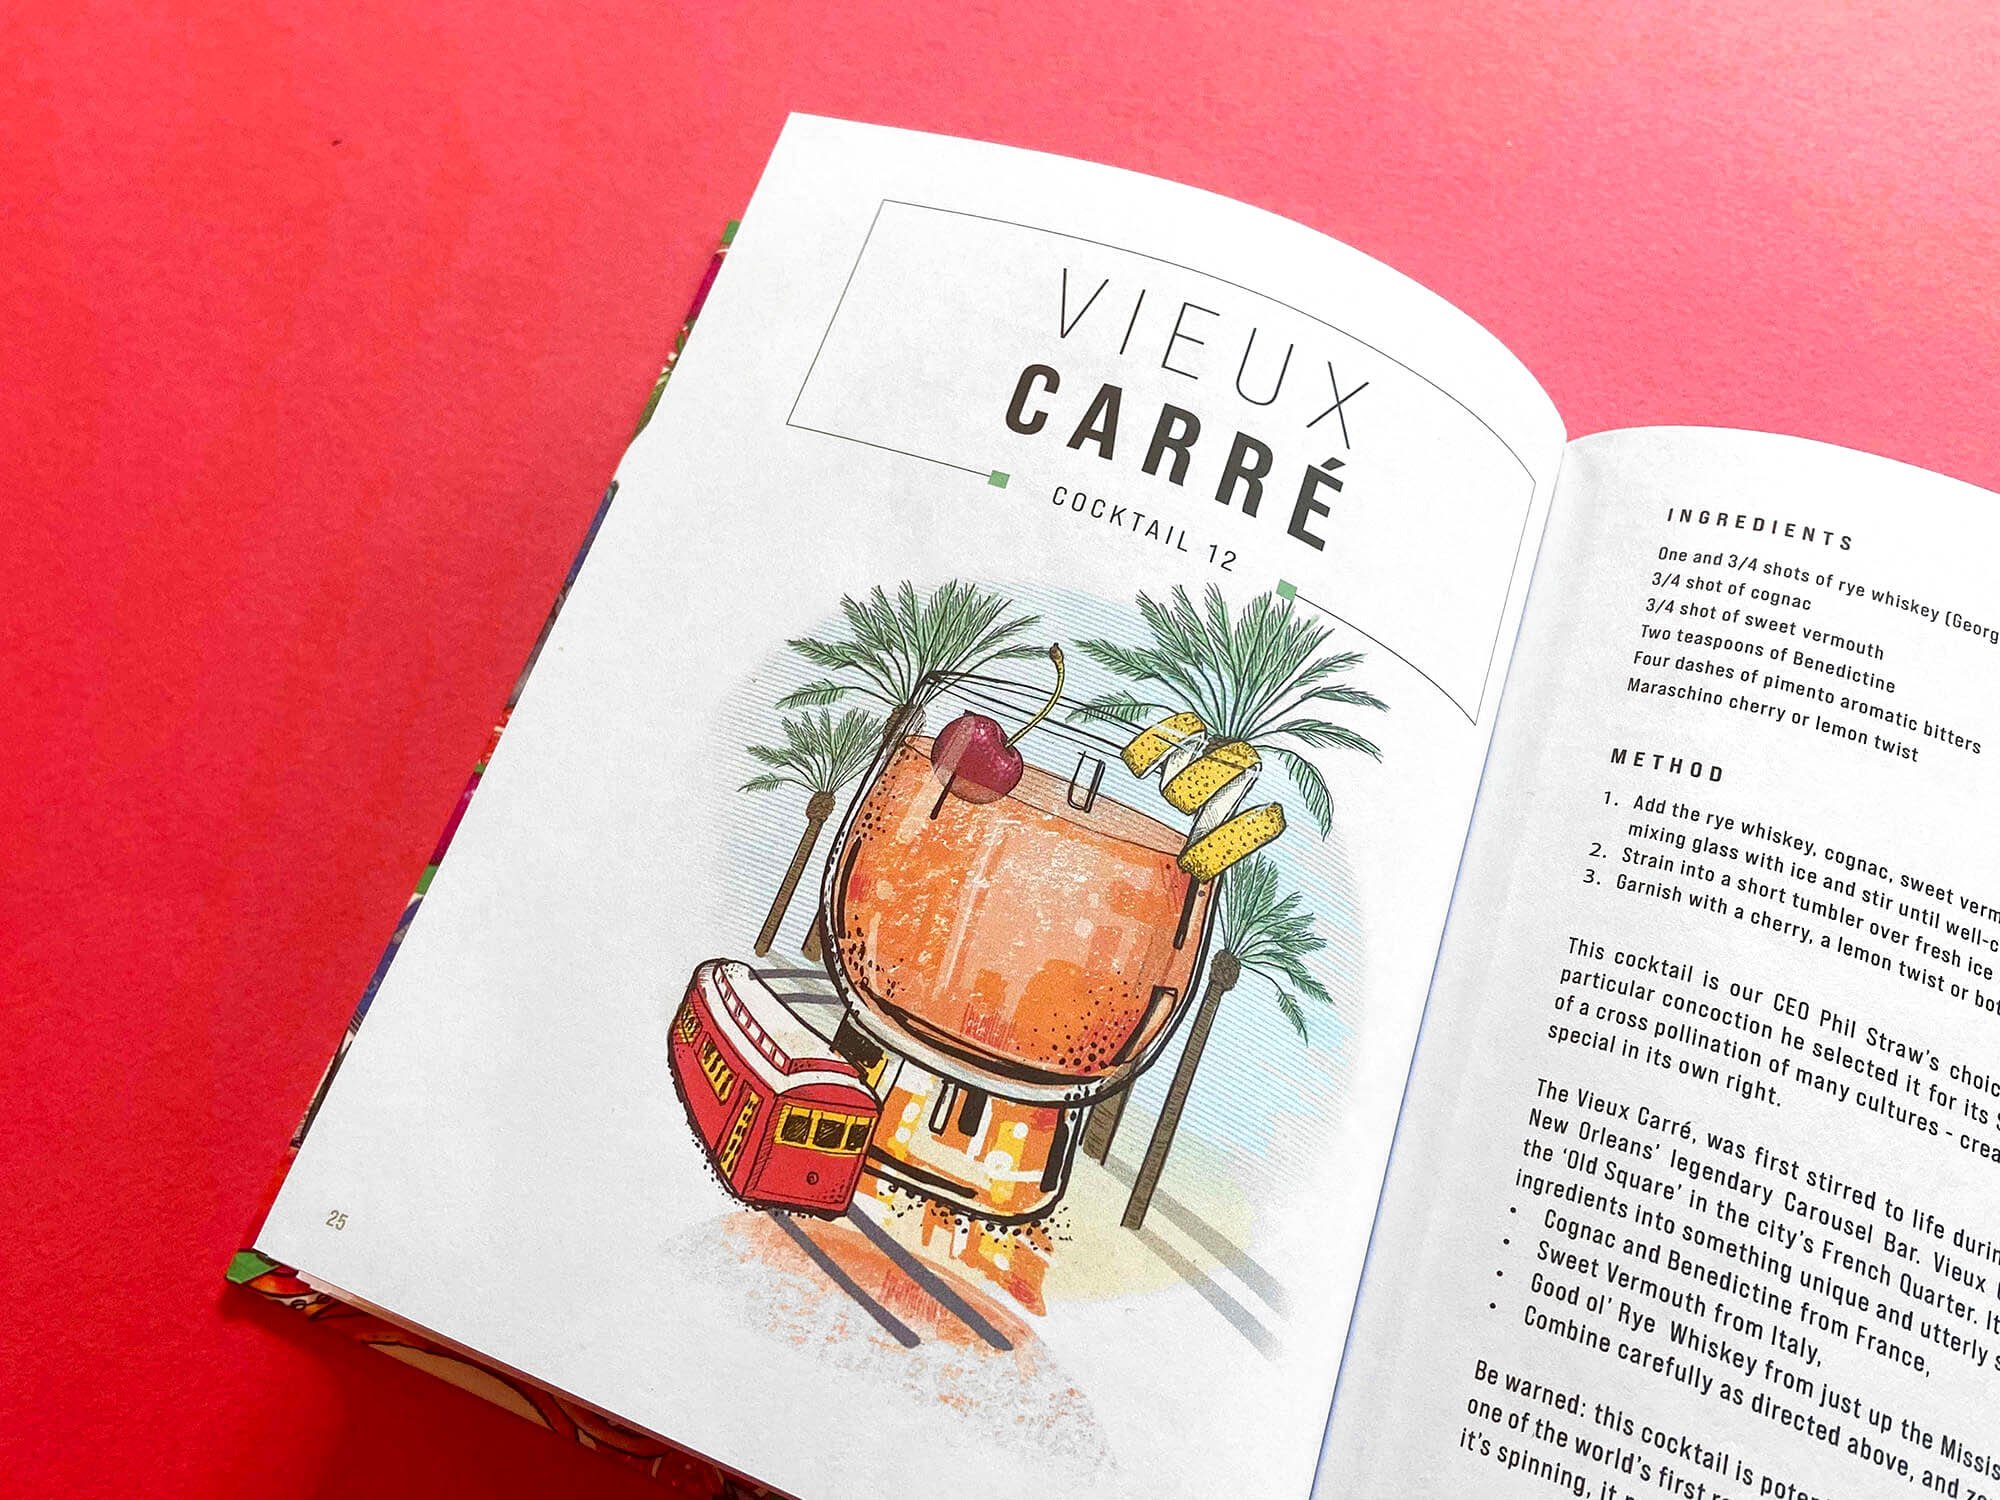 Vieux-Carre-cocktail-recipe-illustration.jpg